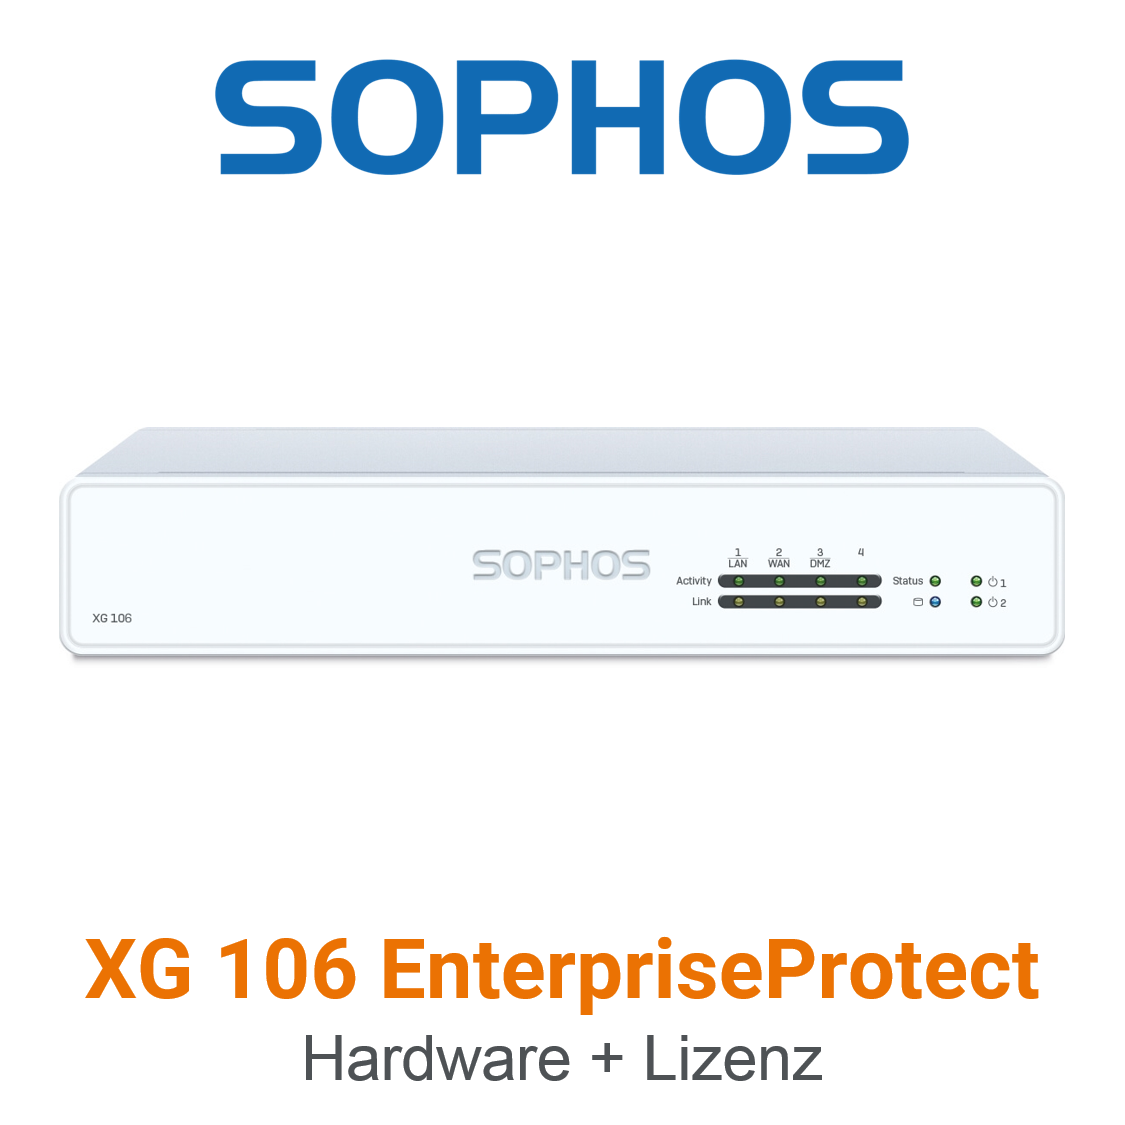 Sophos XG 106 EnterpriseProtect Bundle (Hardware + Lizenz)